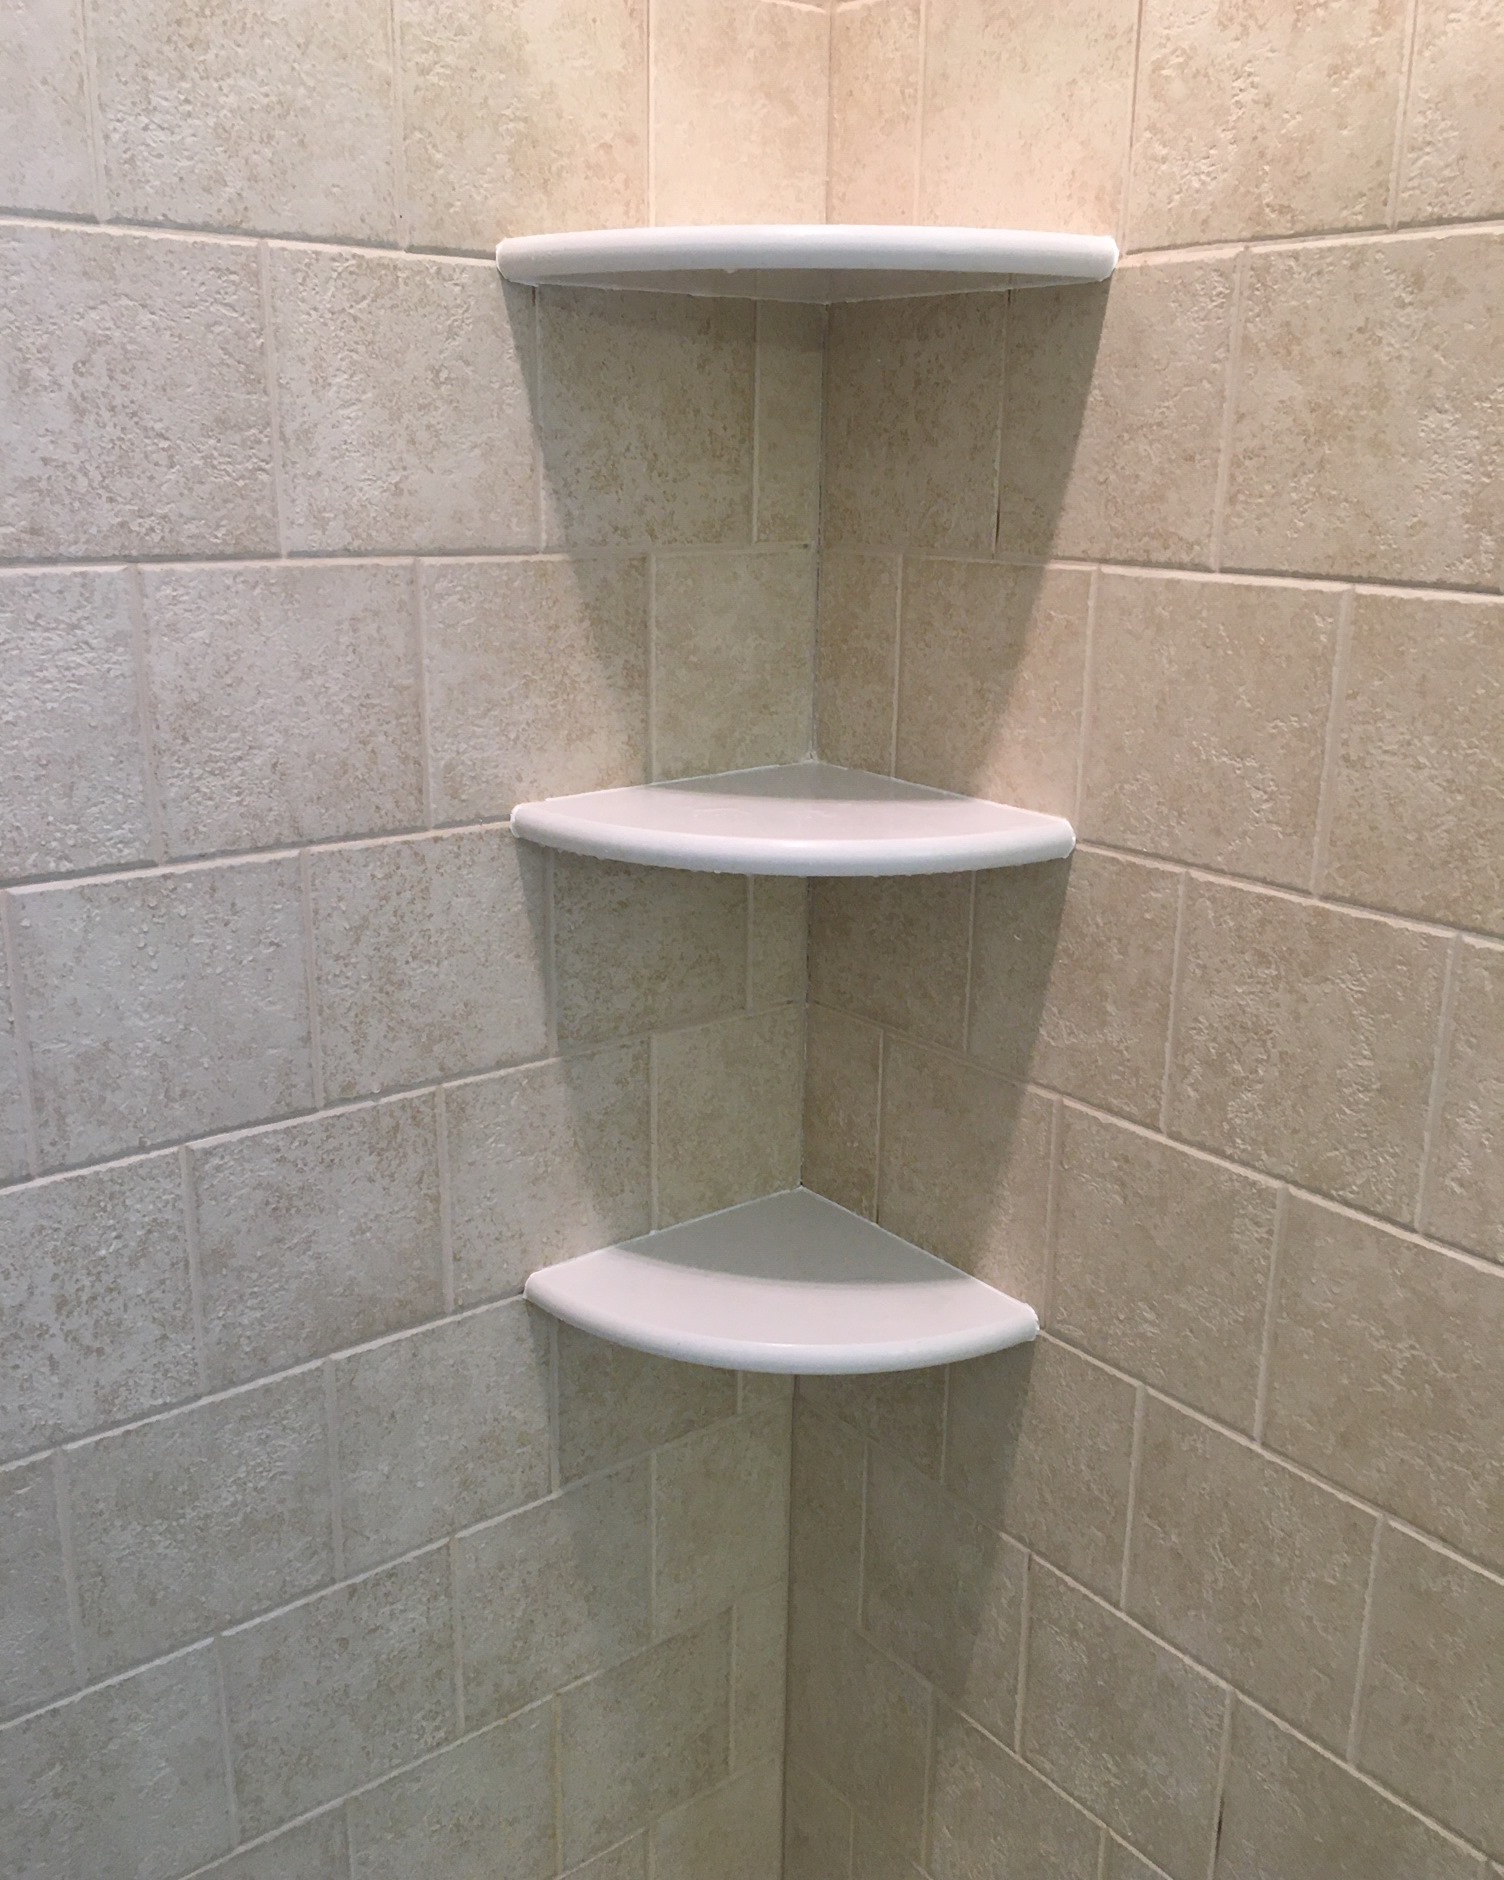 Free Standing Corner Shower Shelf: Easy Installation with GoShelf